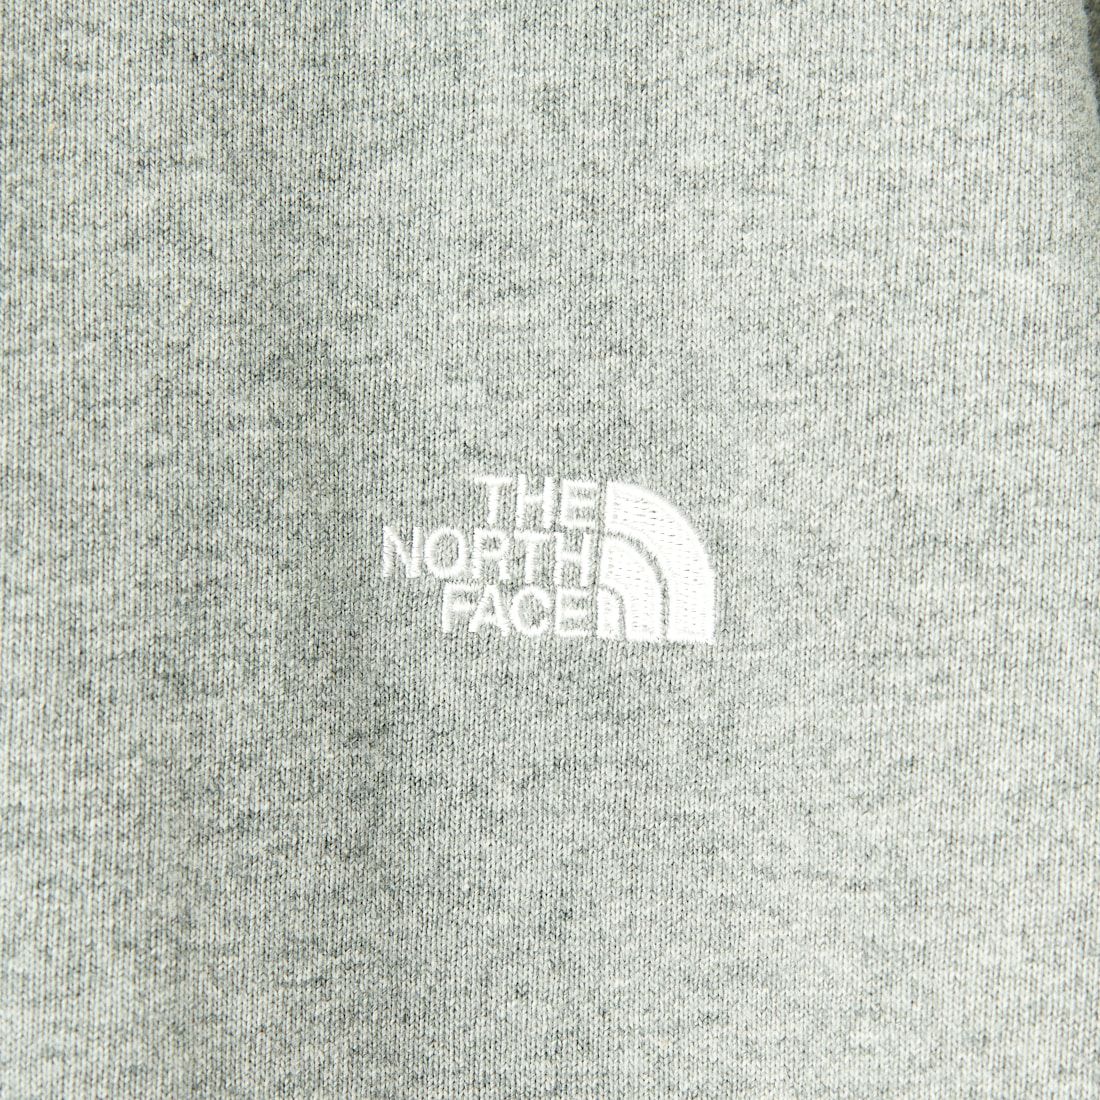 THE NORTH FACE [ザ ノースフェイス] ロングスリーブヌプシコットンティー [NT32443] Z